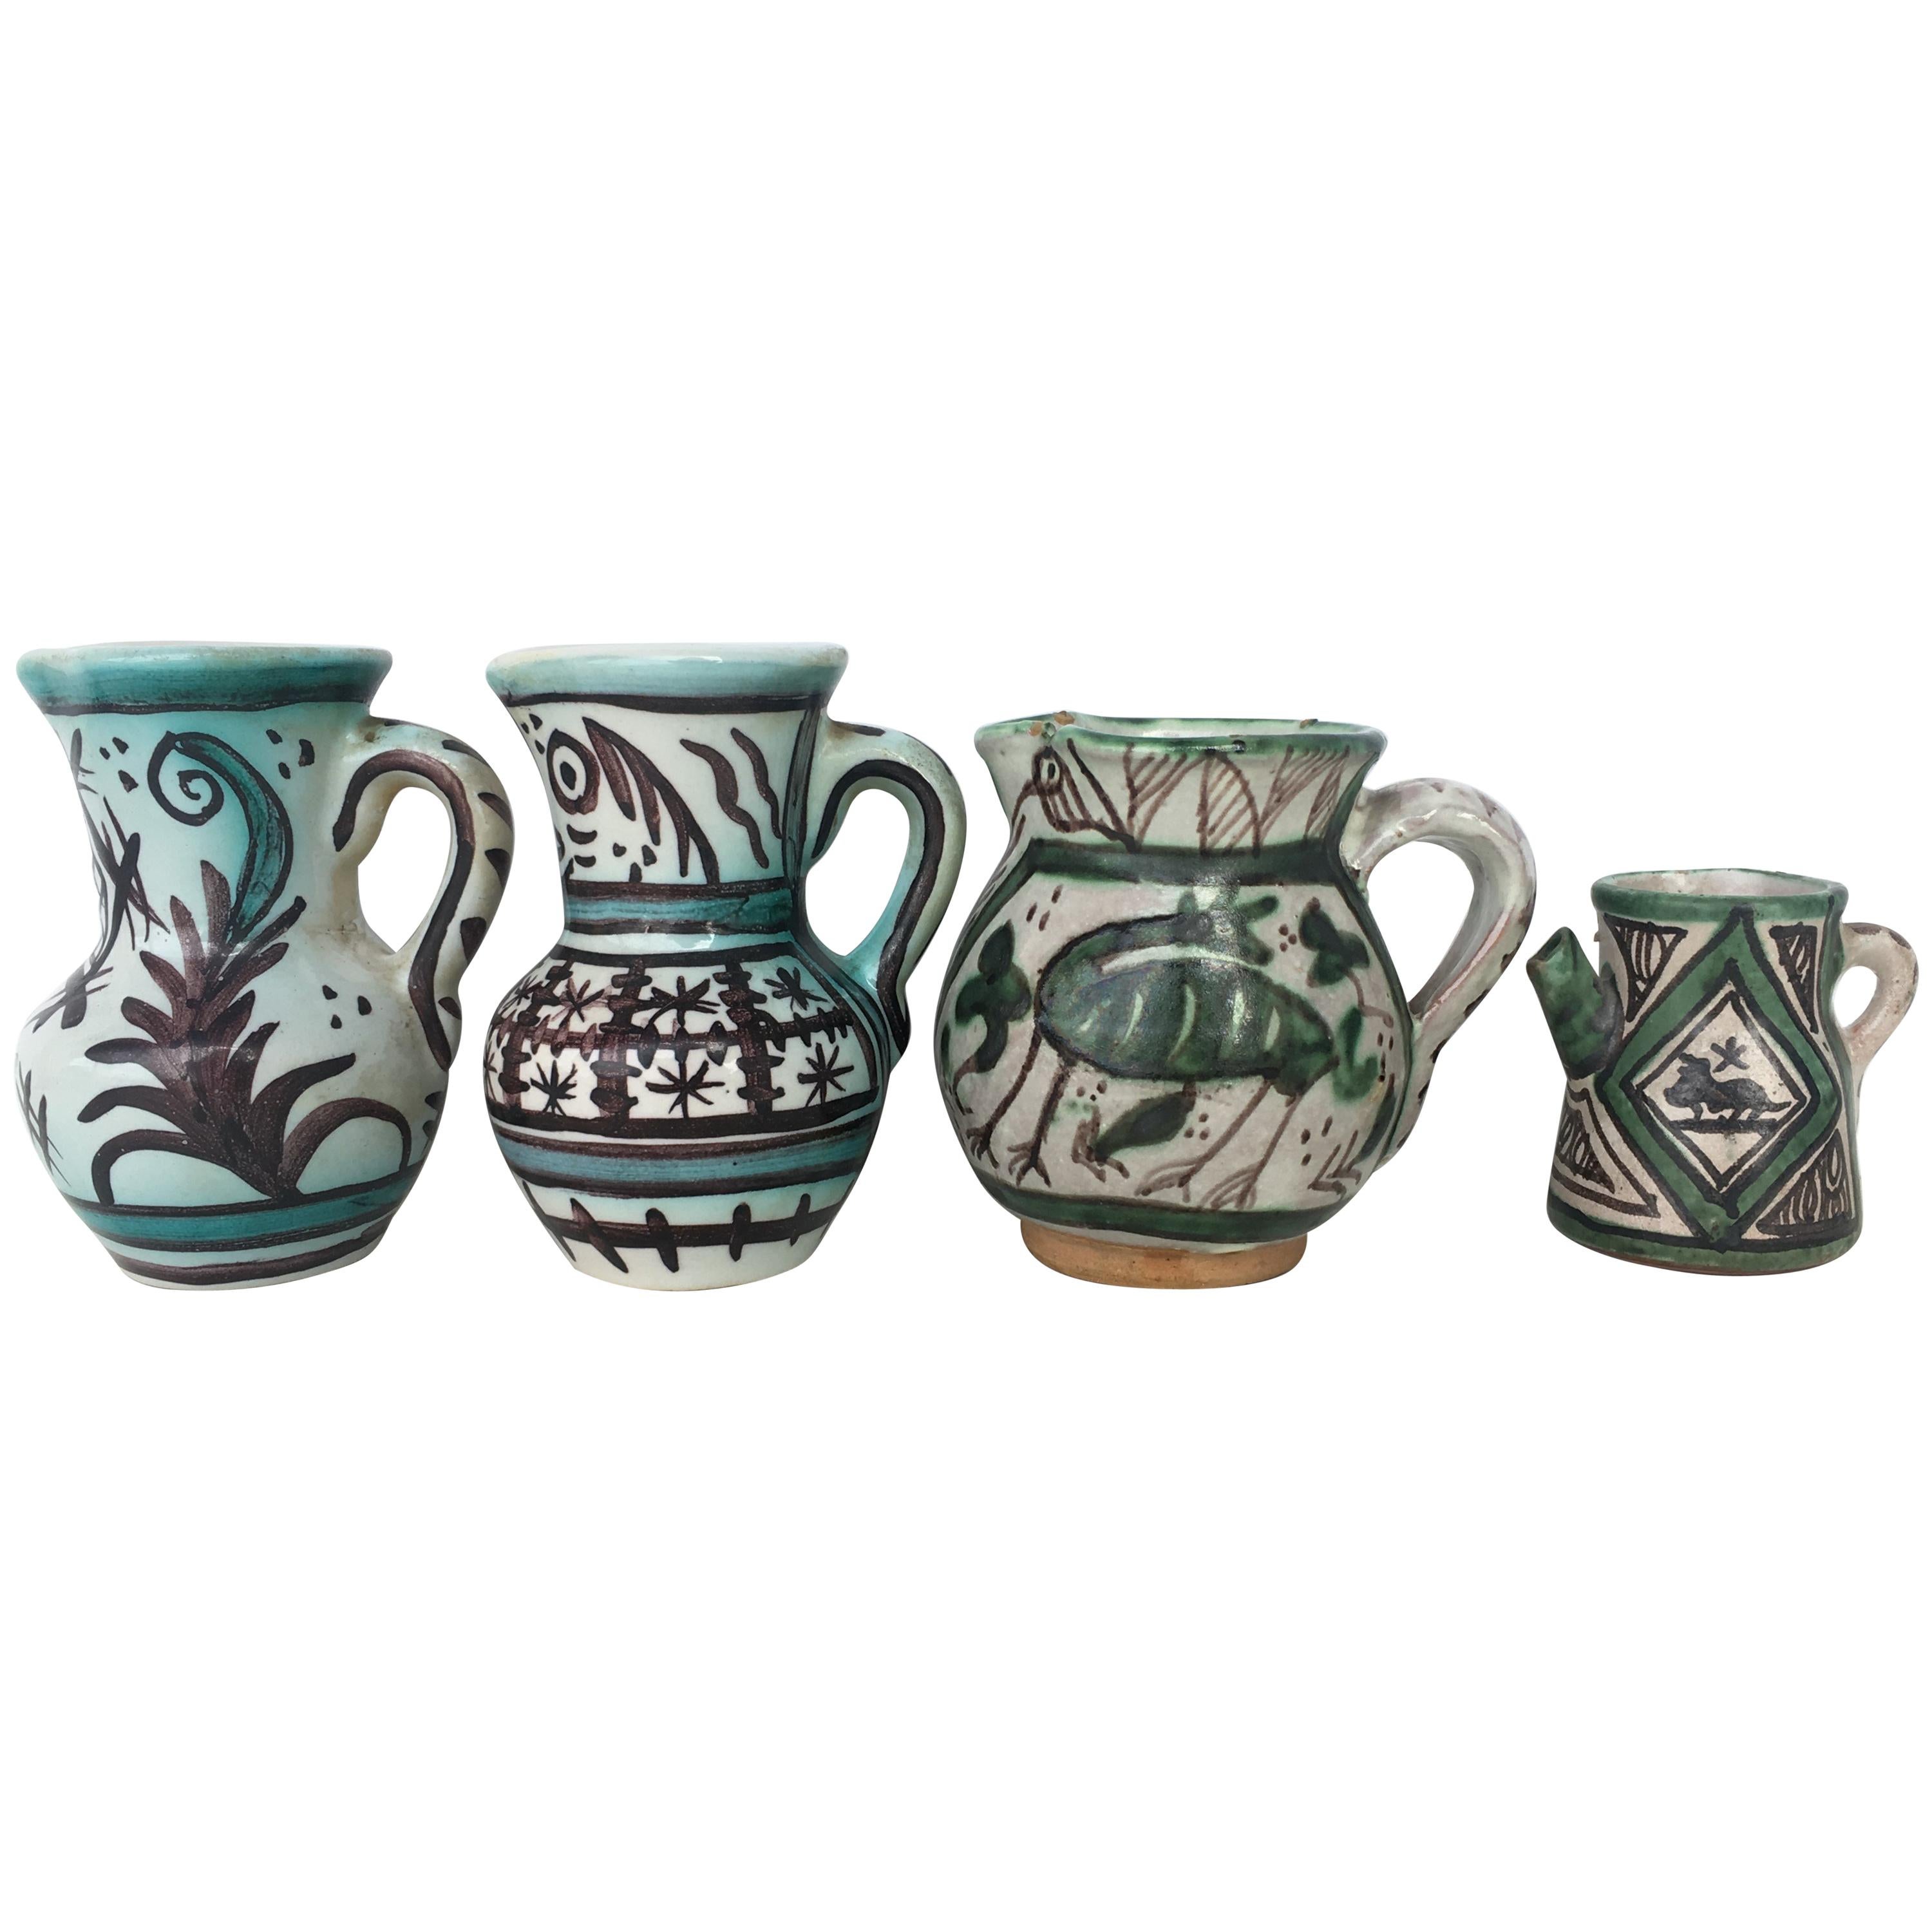 19th Century Set of Four Glazed Terracotta Vases, Urns Pitchers in Green & White